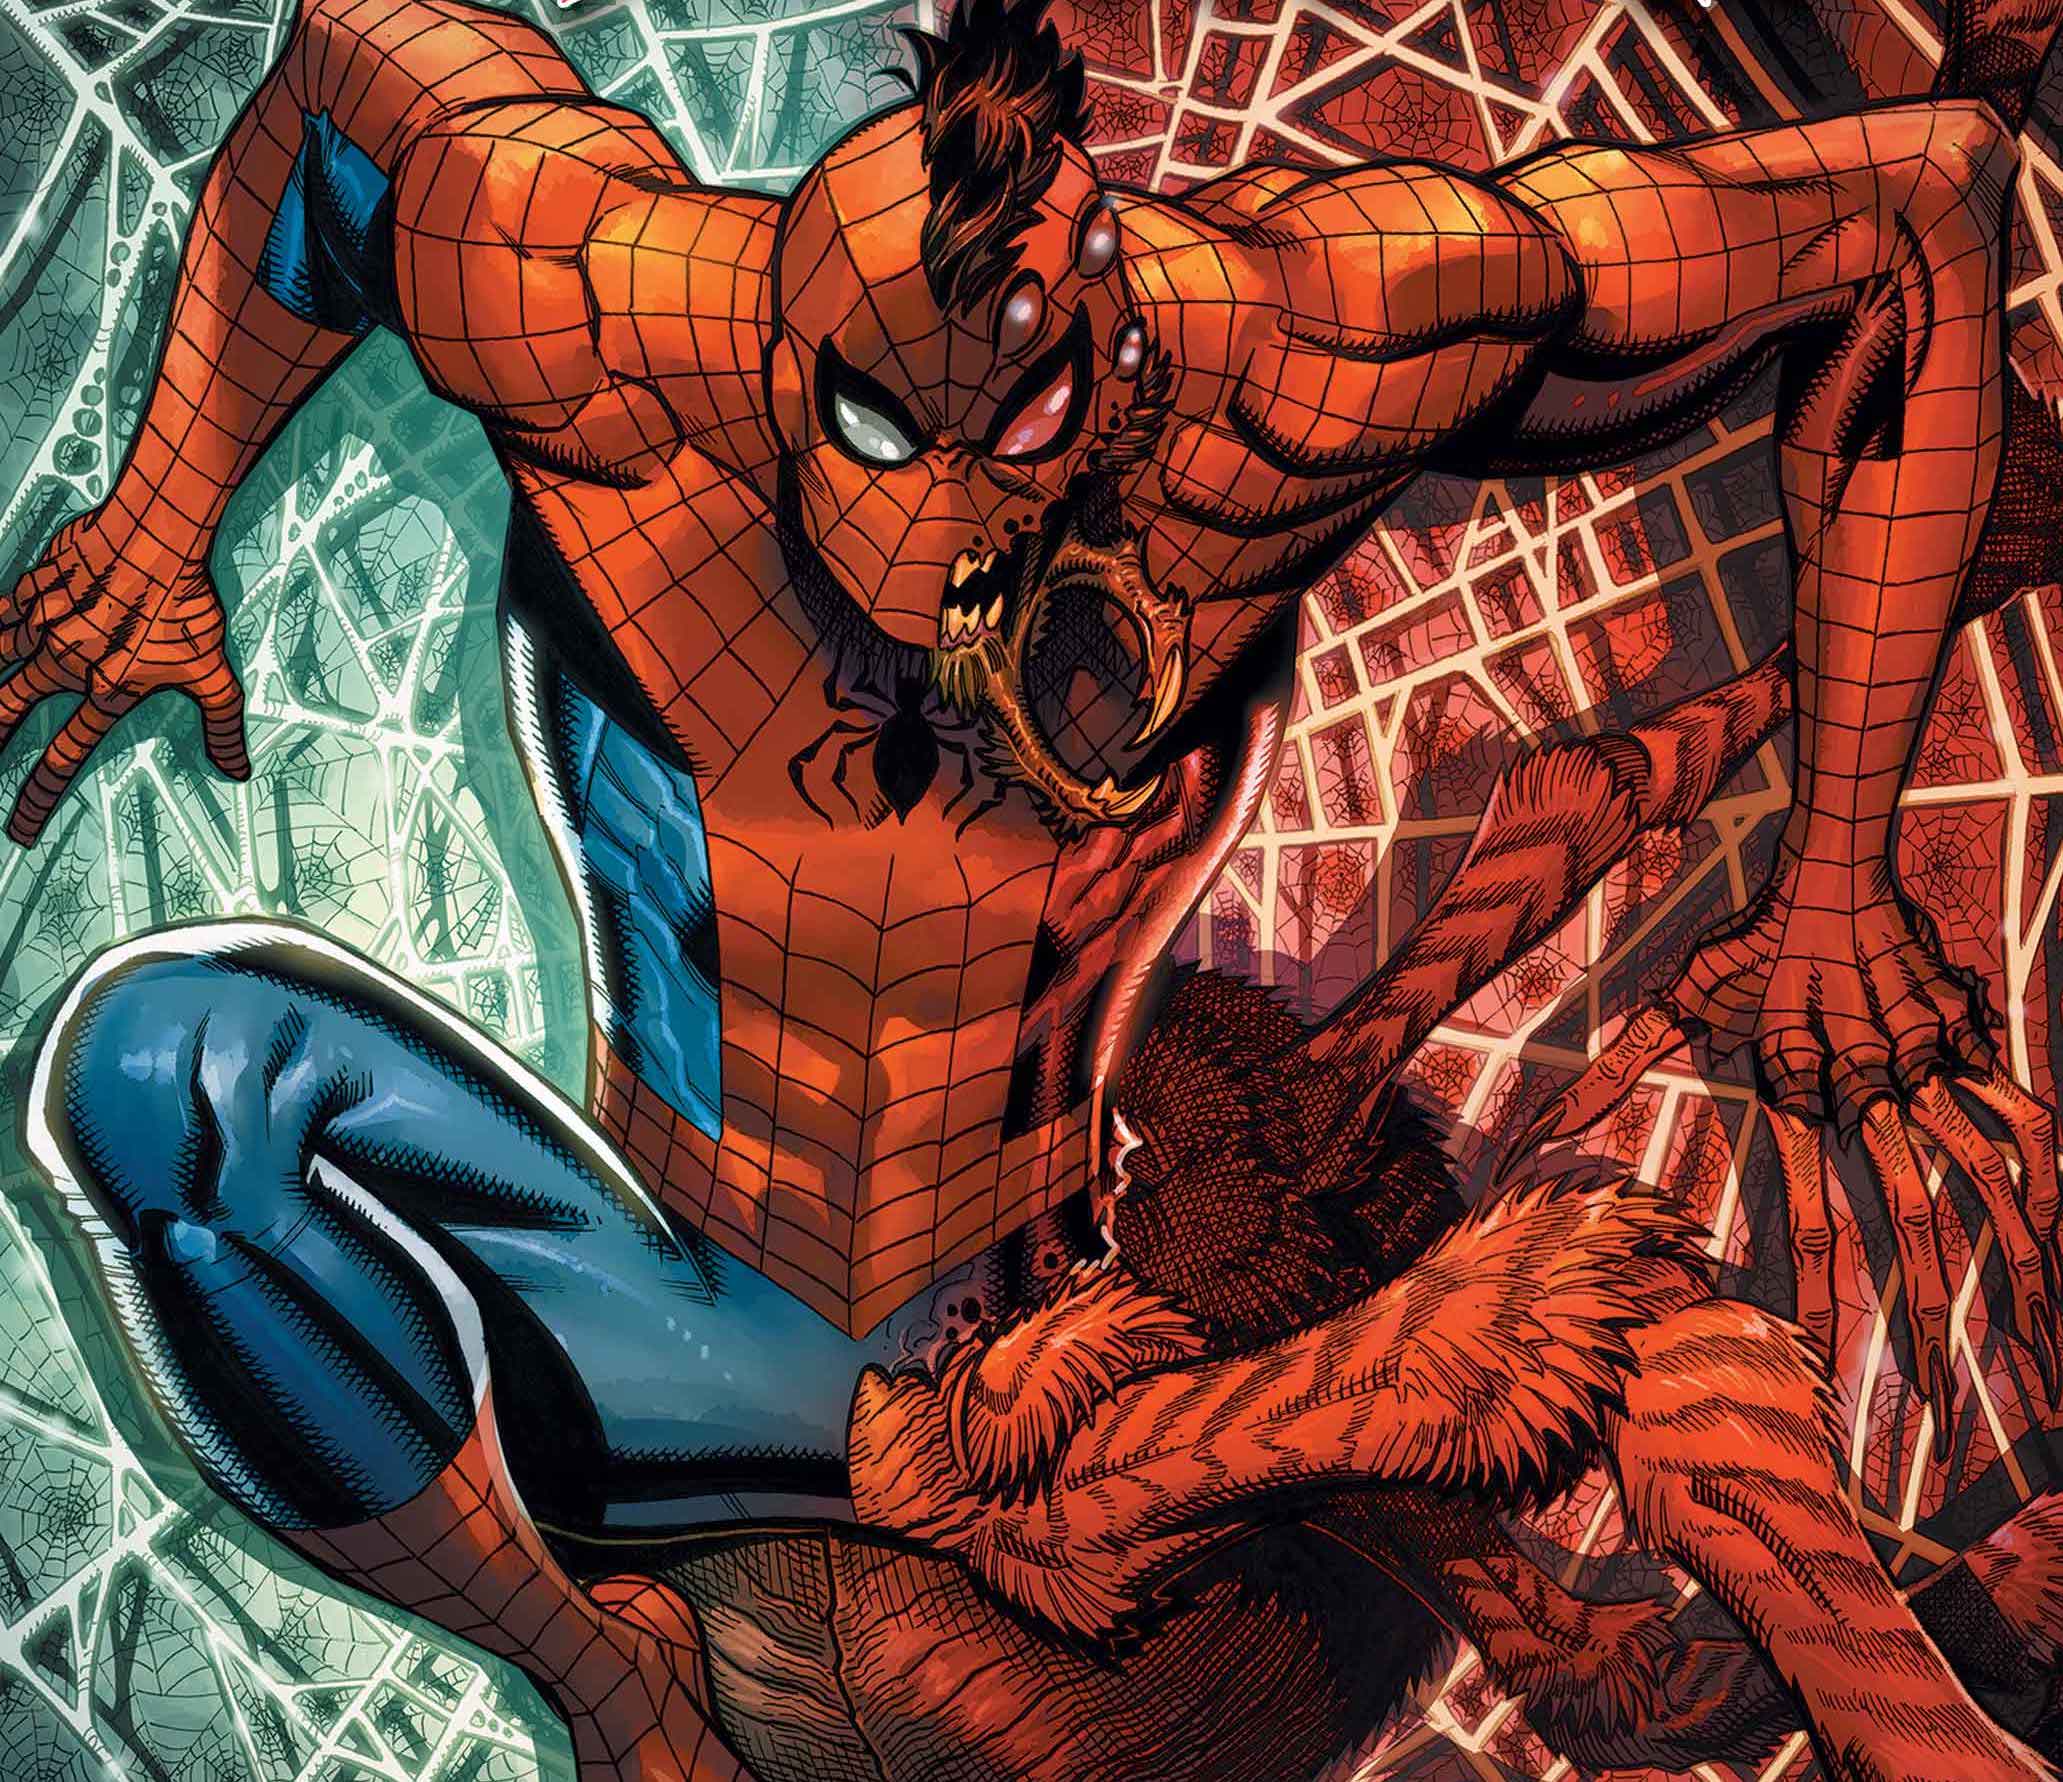 'Savage Spider-Man' #1 is visually stunning but light on story